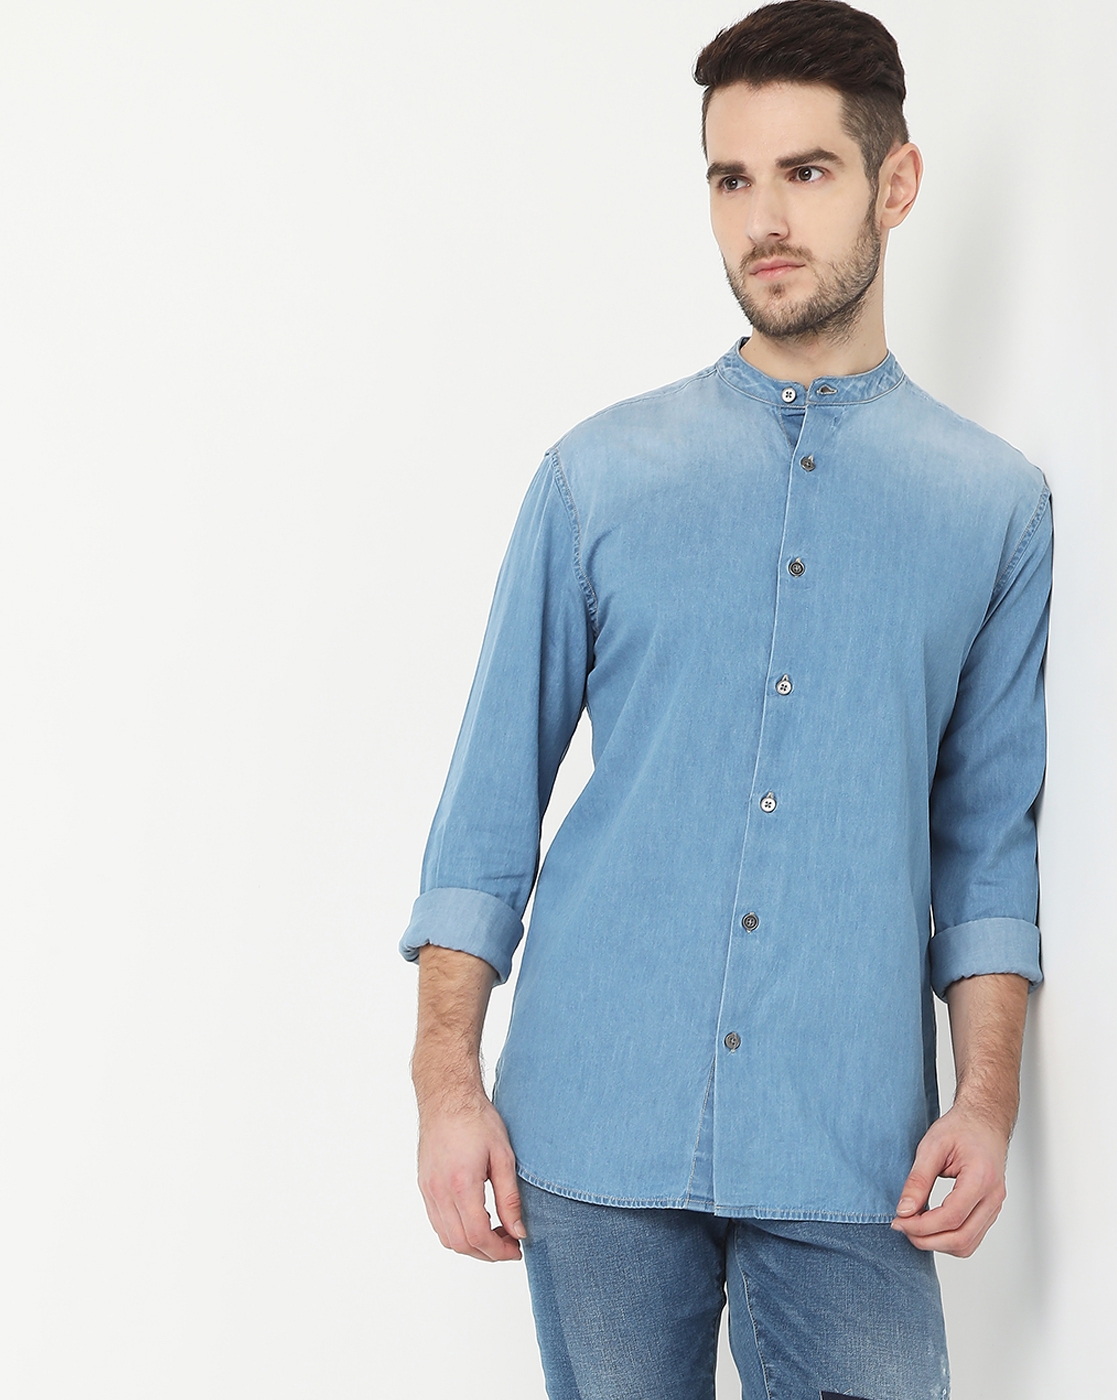 TOM FORD denim shirt button-down collar dark blue | BRAUN Hamburg